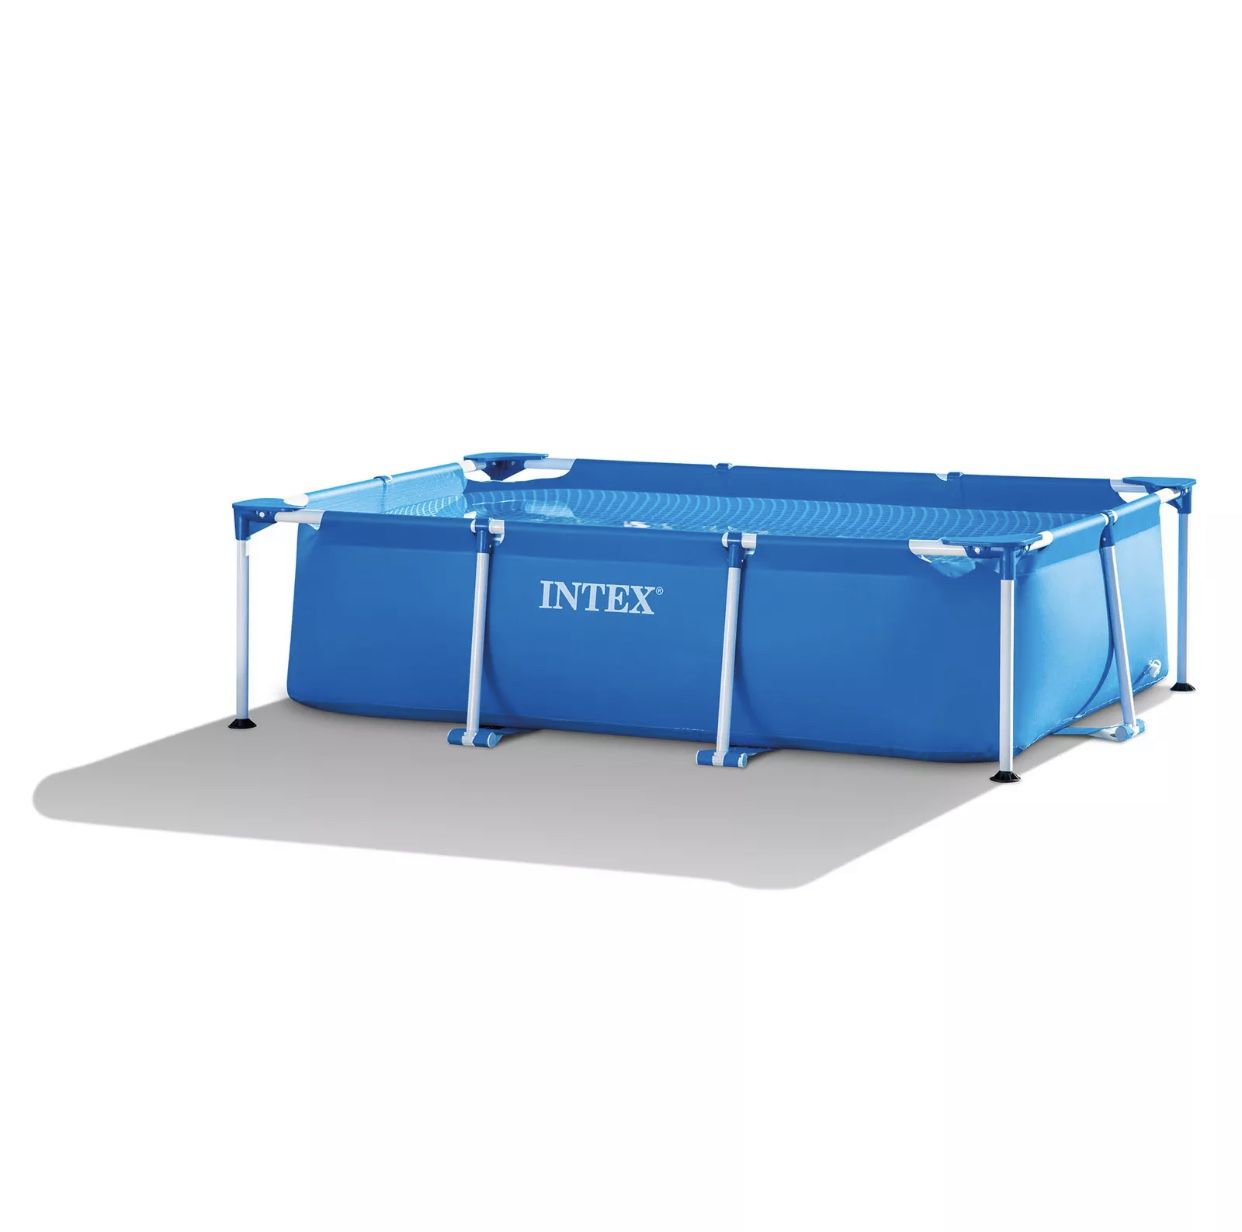 Intex pool Intex 8.5ft x 26in Rectangular Frame Above Ground Backyard Swimming Pool, Blue